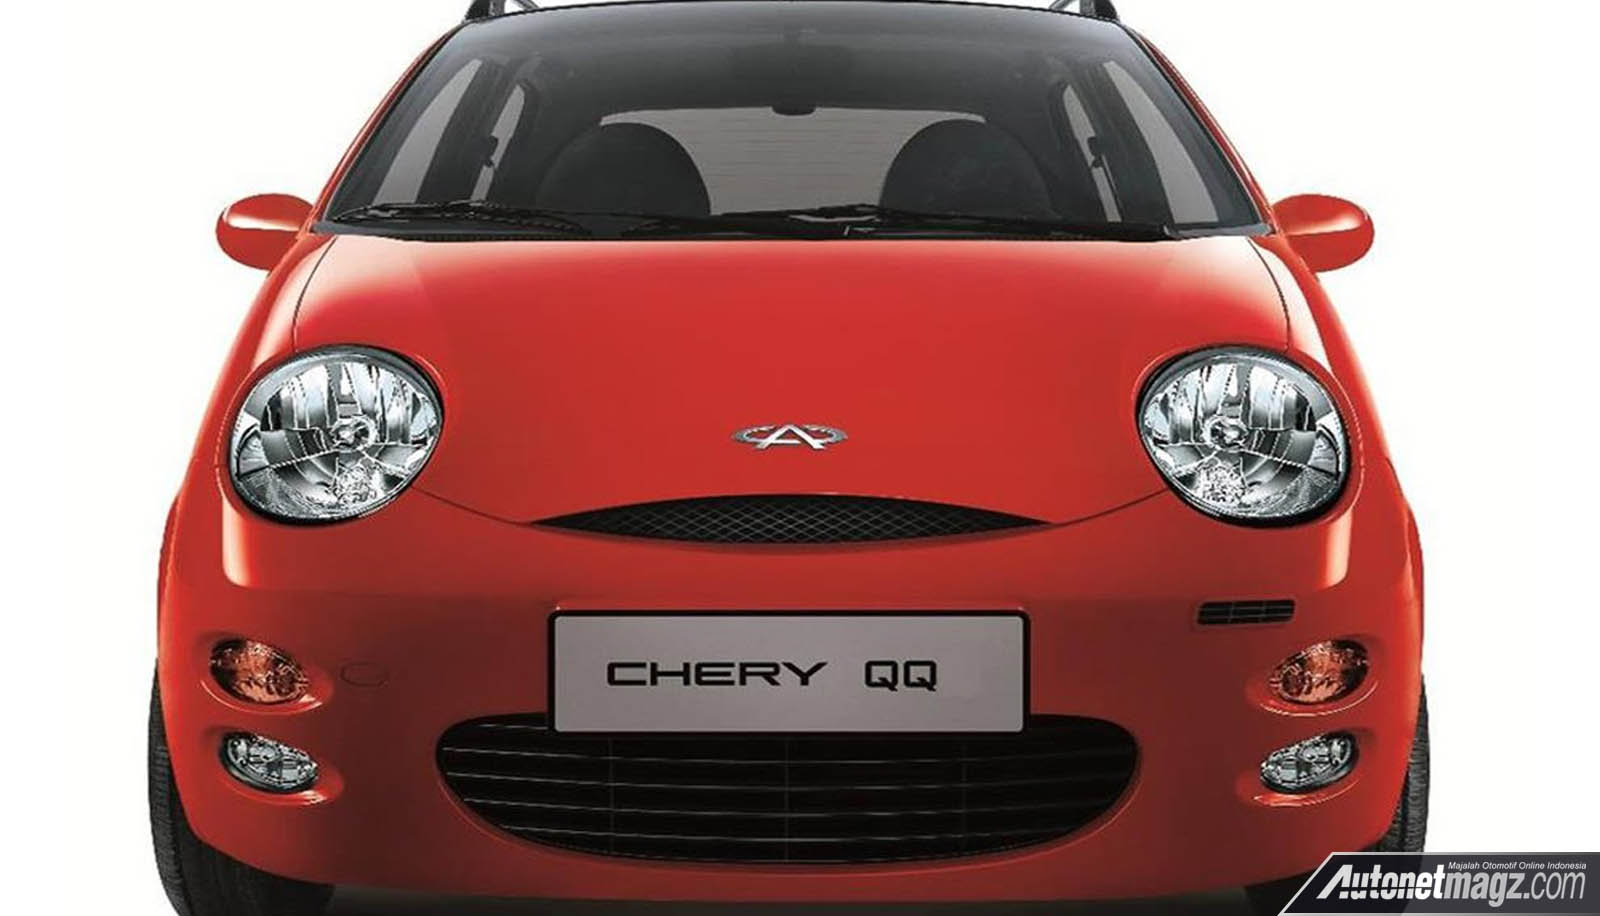 Cherry QQ  AutonetMagz Review Mobil  dan Motor Baru 